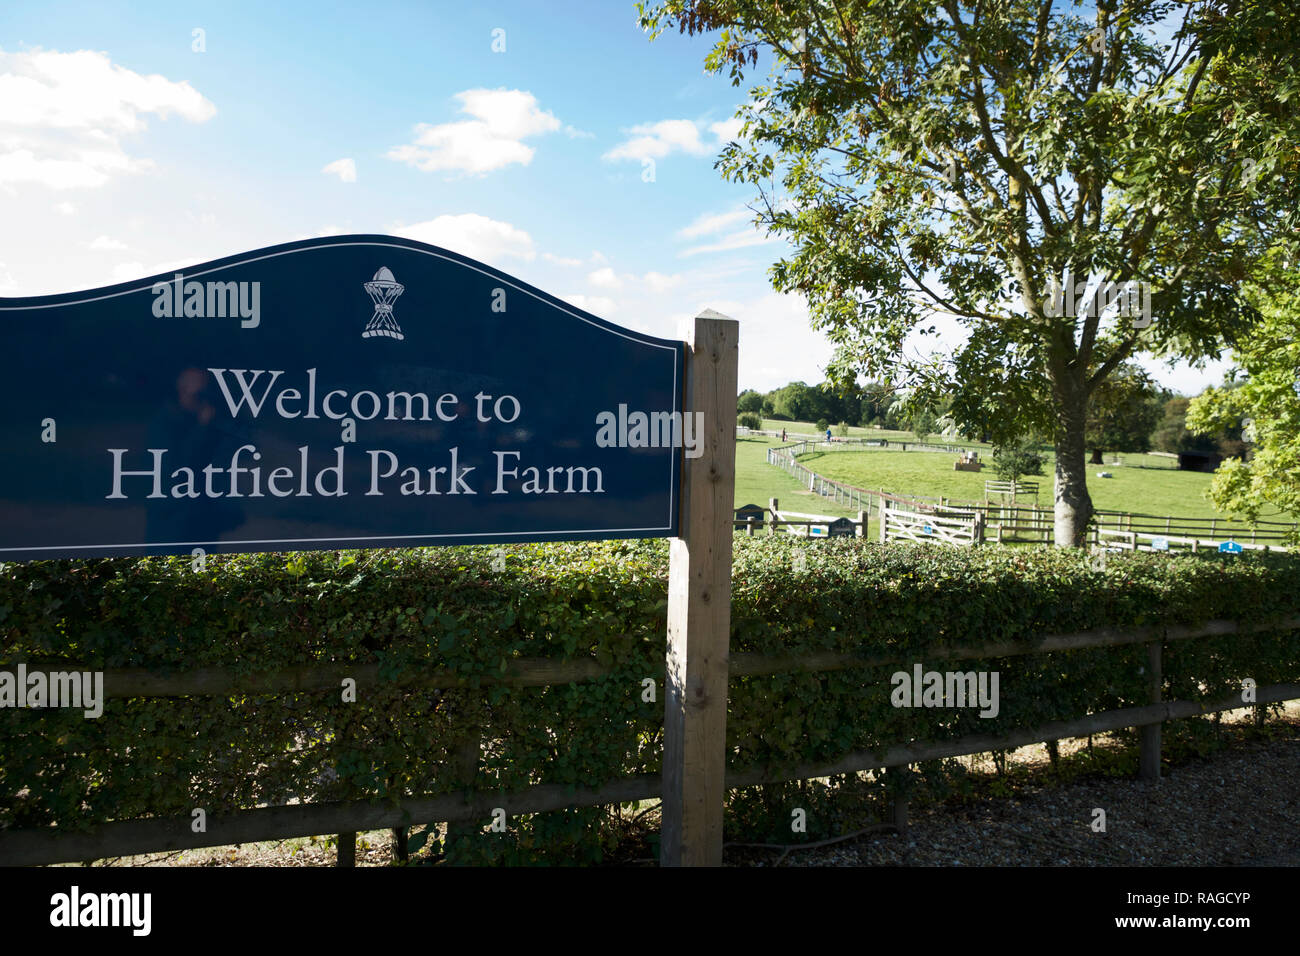 Hatfield Park Farm, Hertfordshire, England. Stock Photo